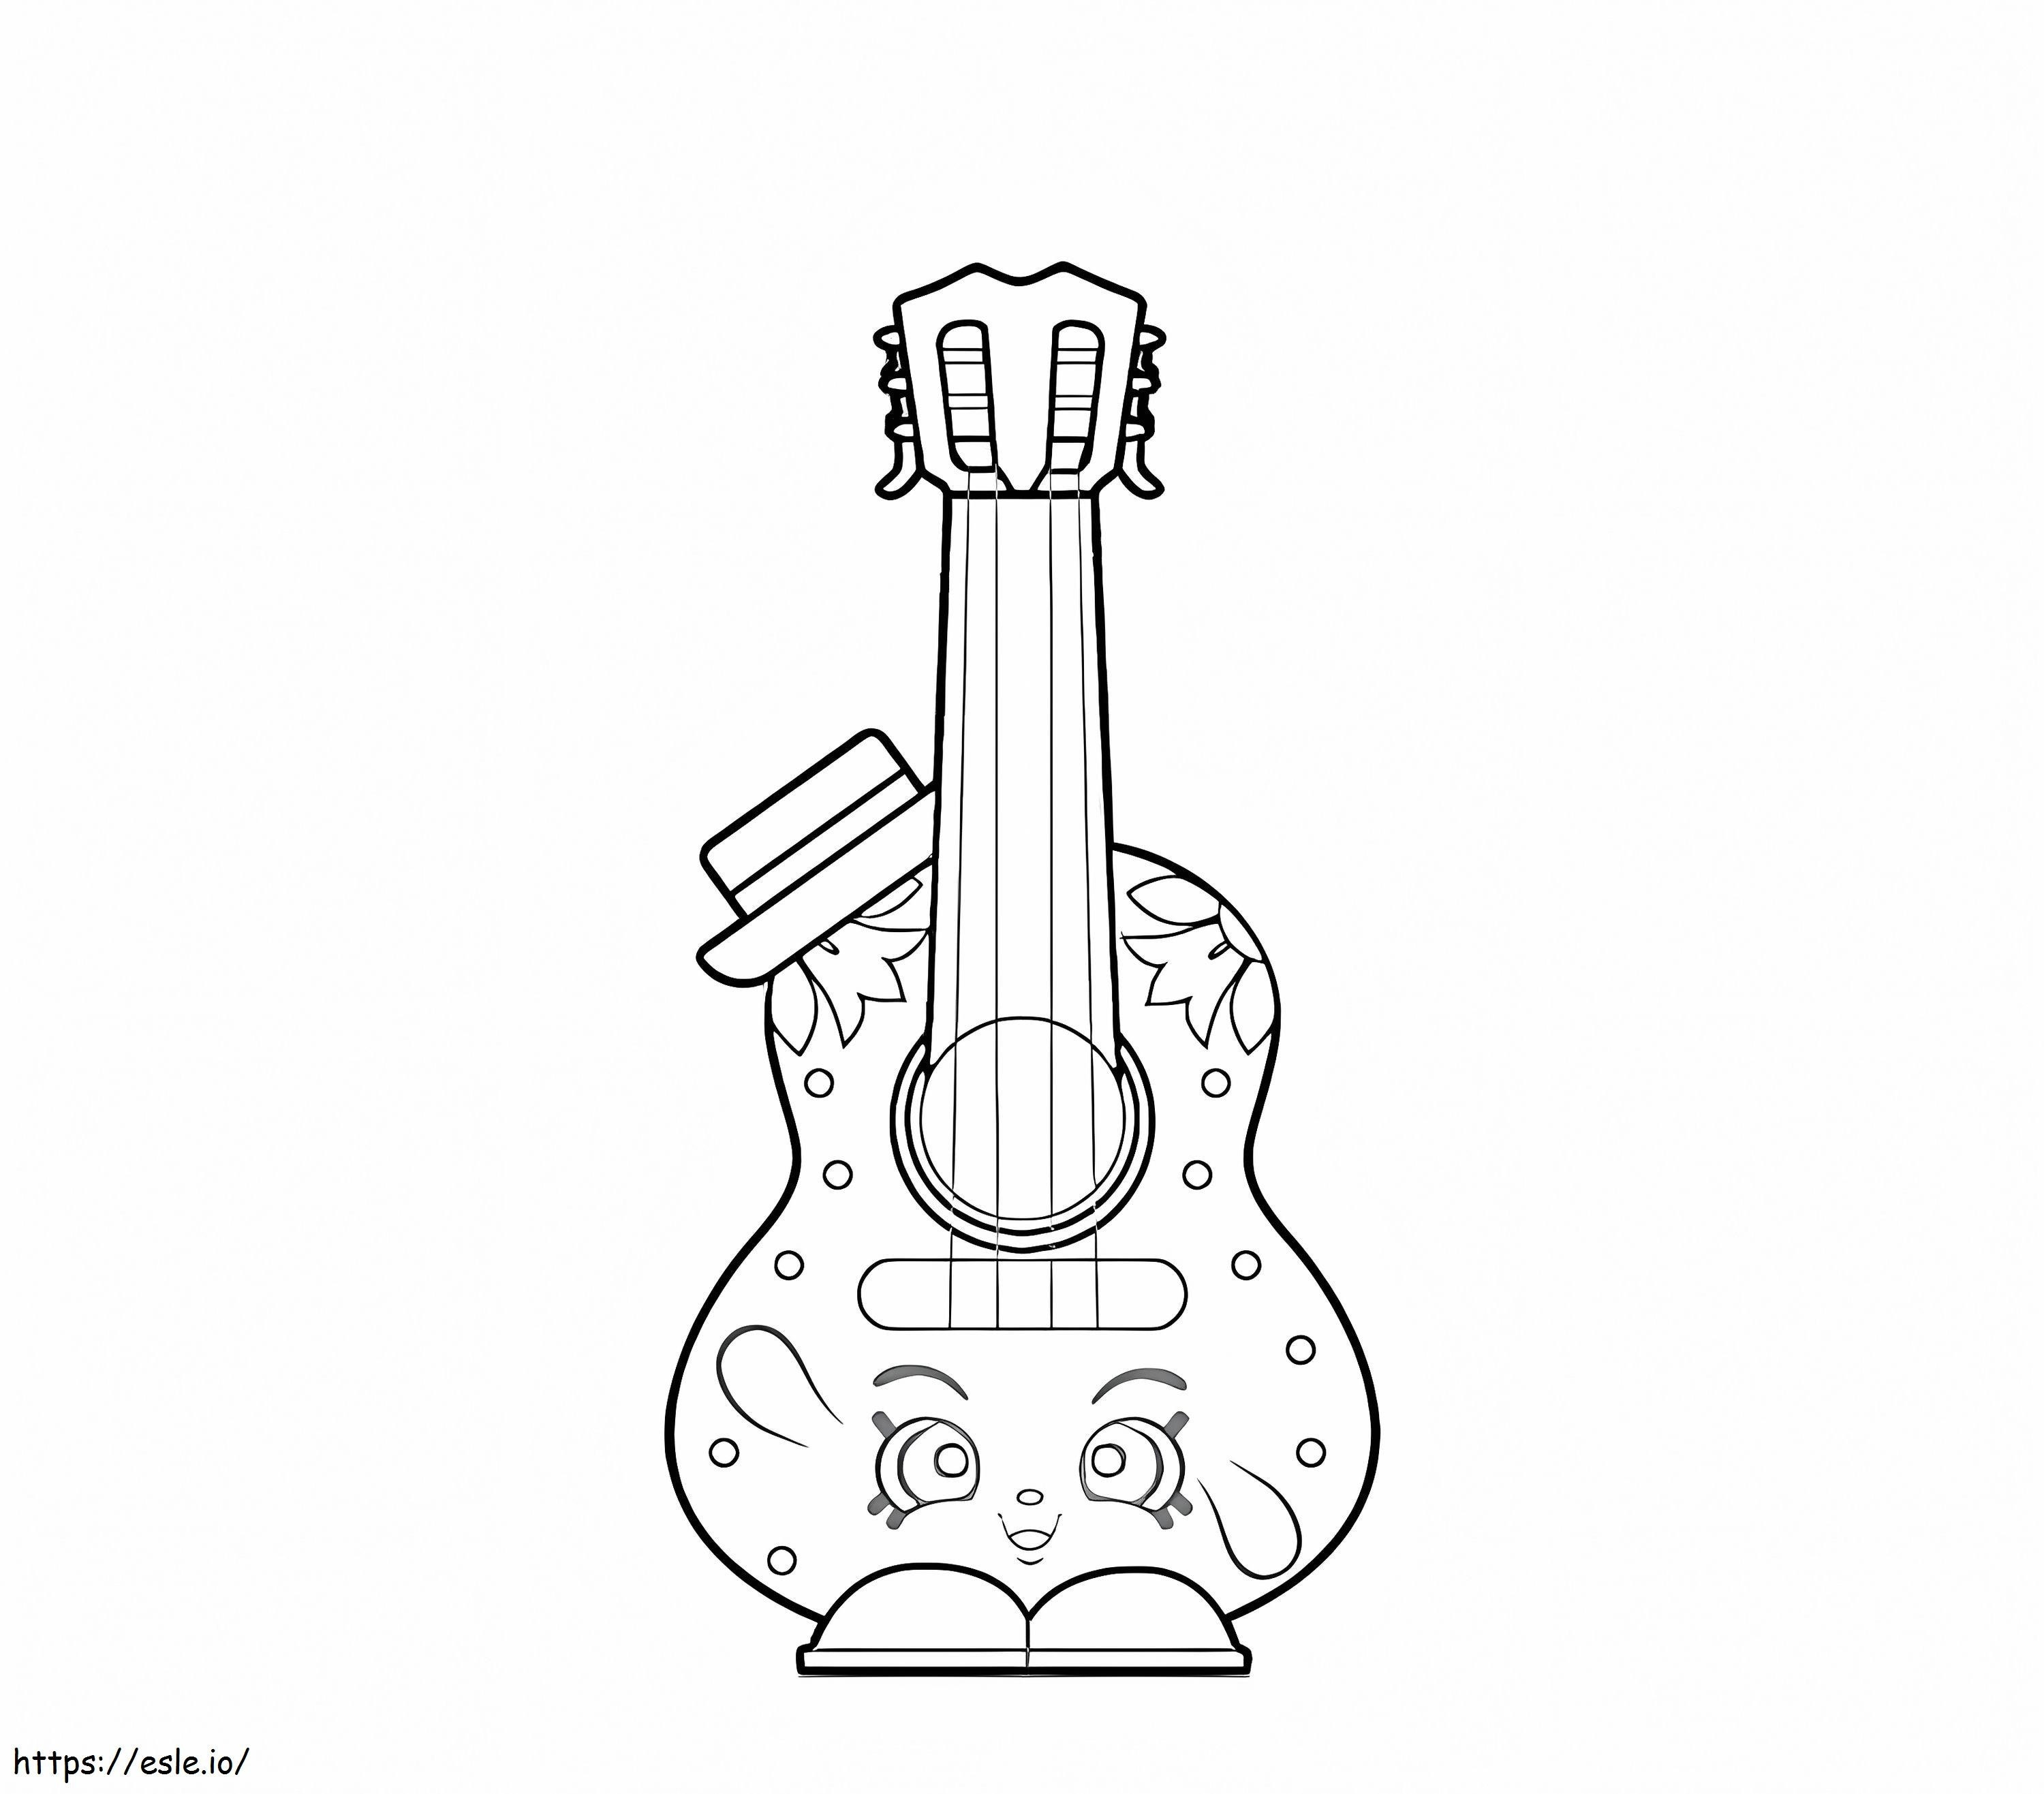 Gilberto Guitar Shopkin coloring page